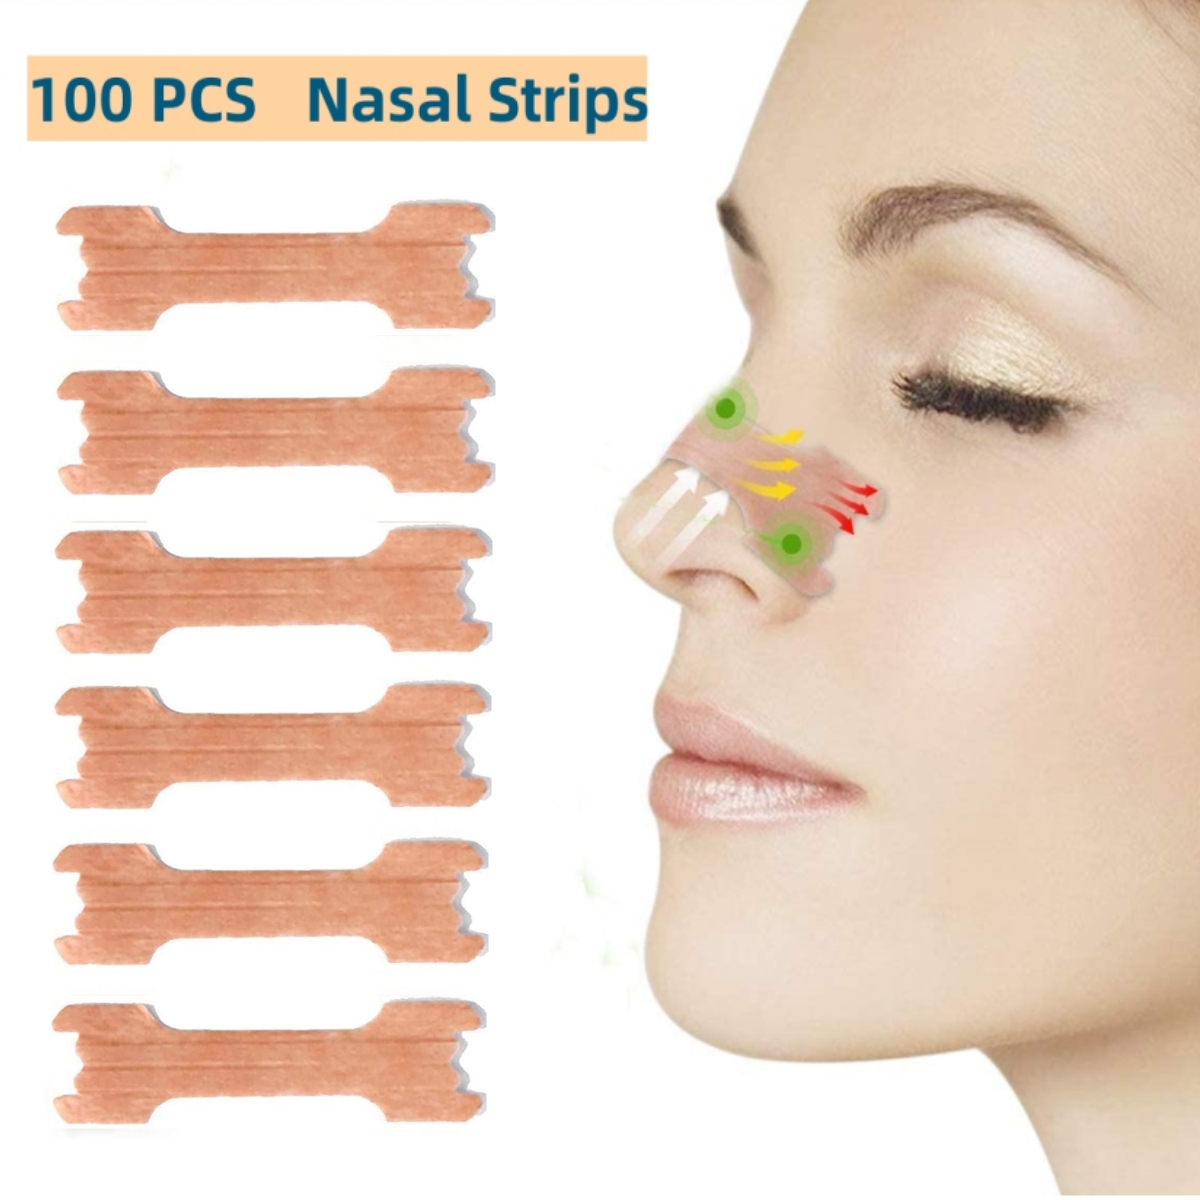 How Do Nasal Strips Work?